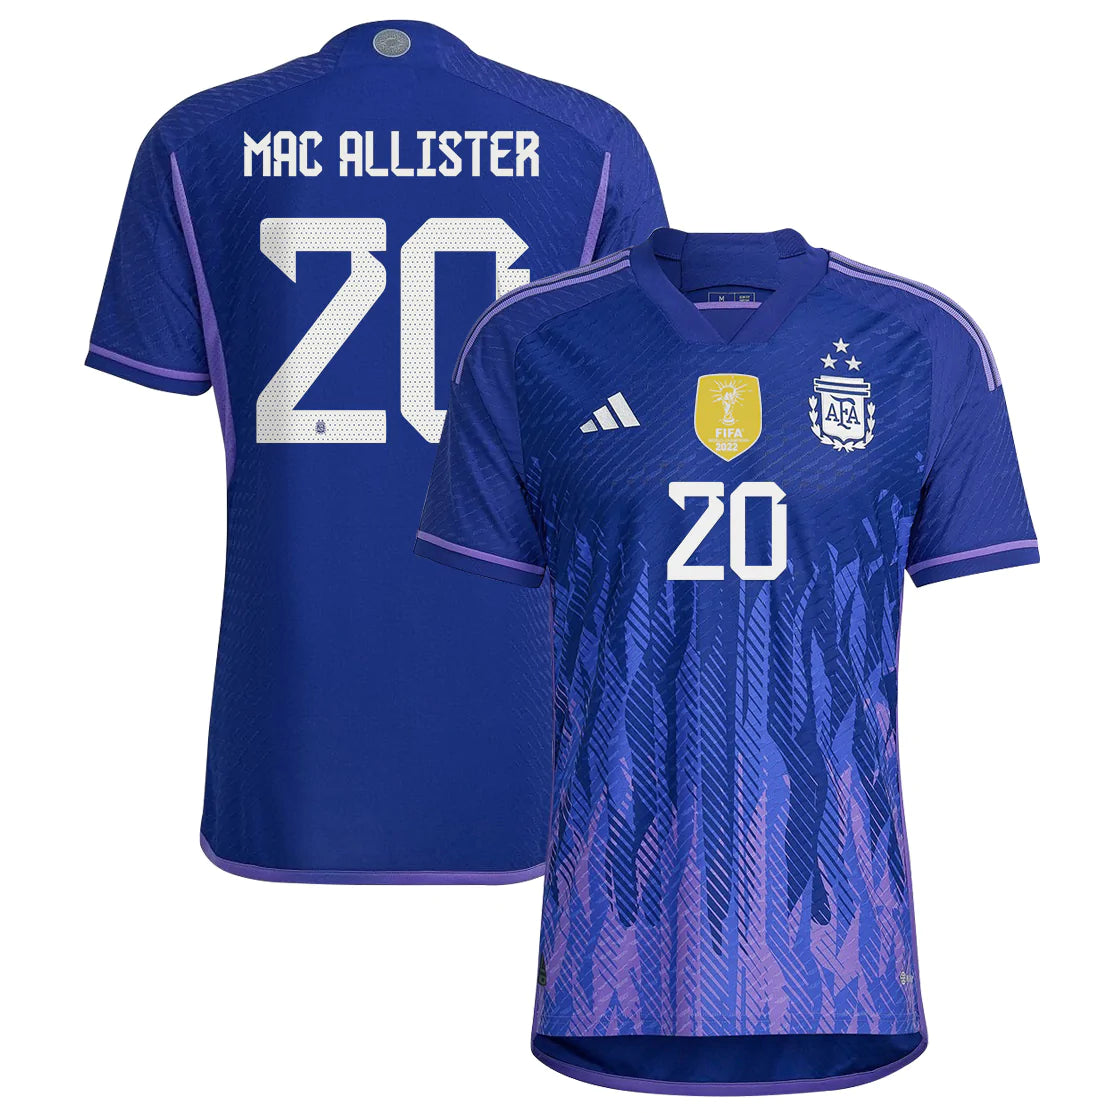 Alexis Mac Allister Argentina 20 FIFA World Cup Jersey